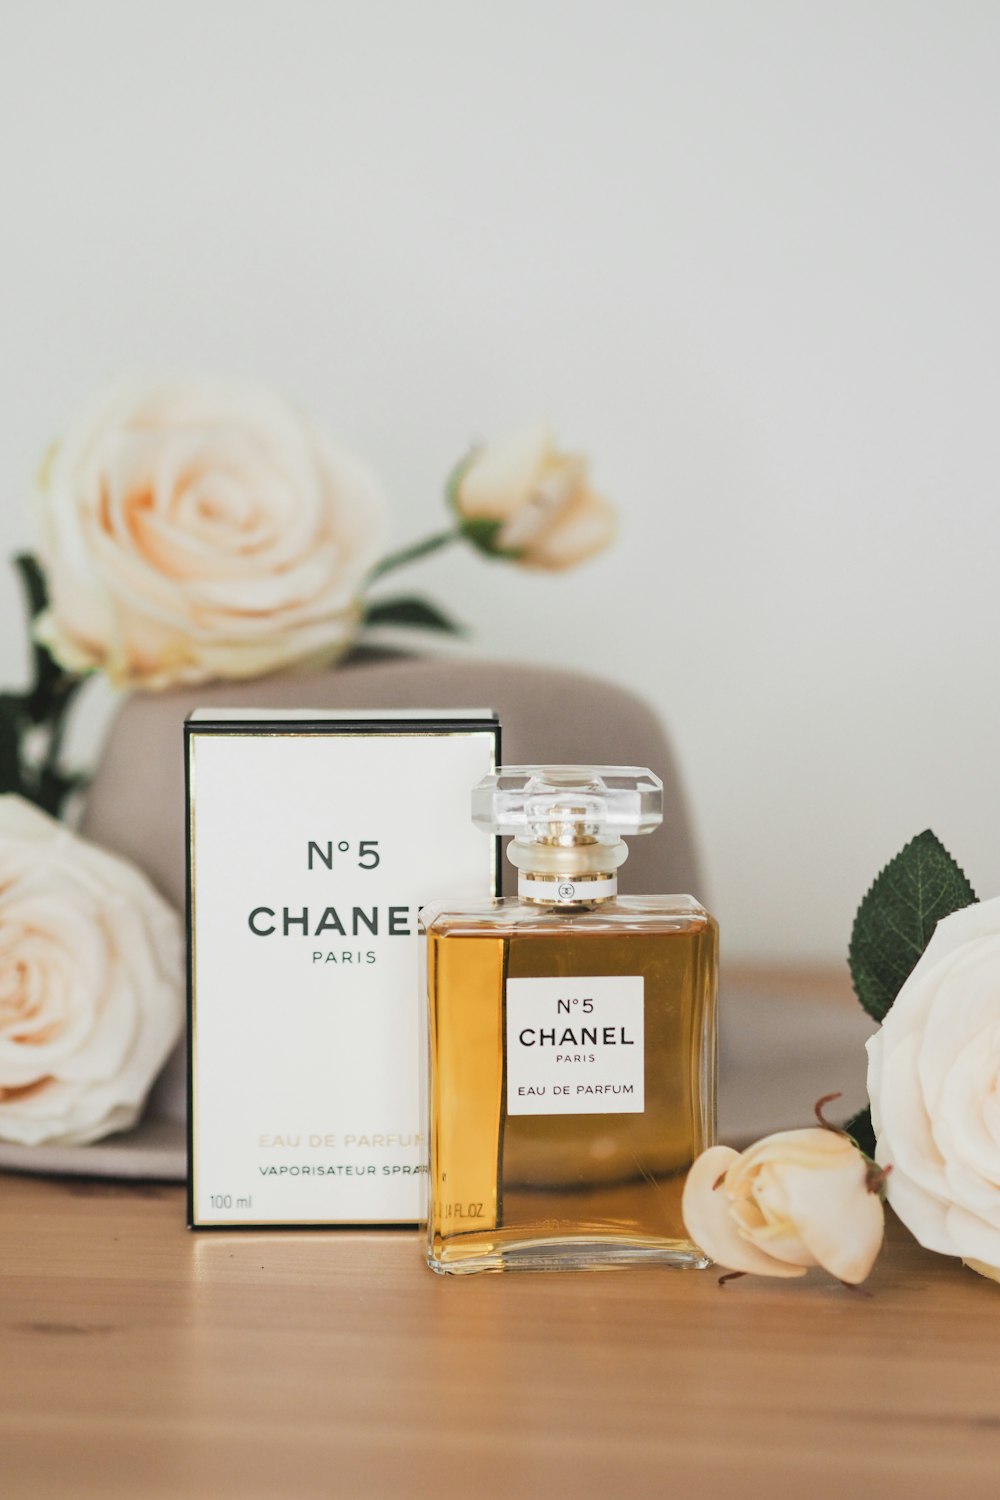 N5 Chanel eau de parfum spray bottle photo – Free Fashion Image on Unsplash